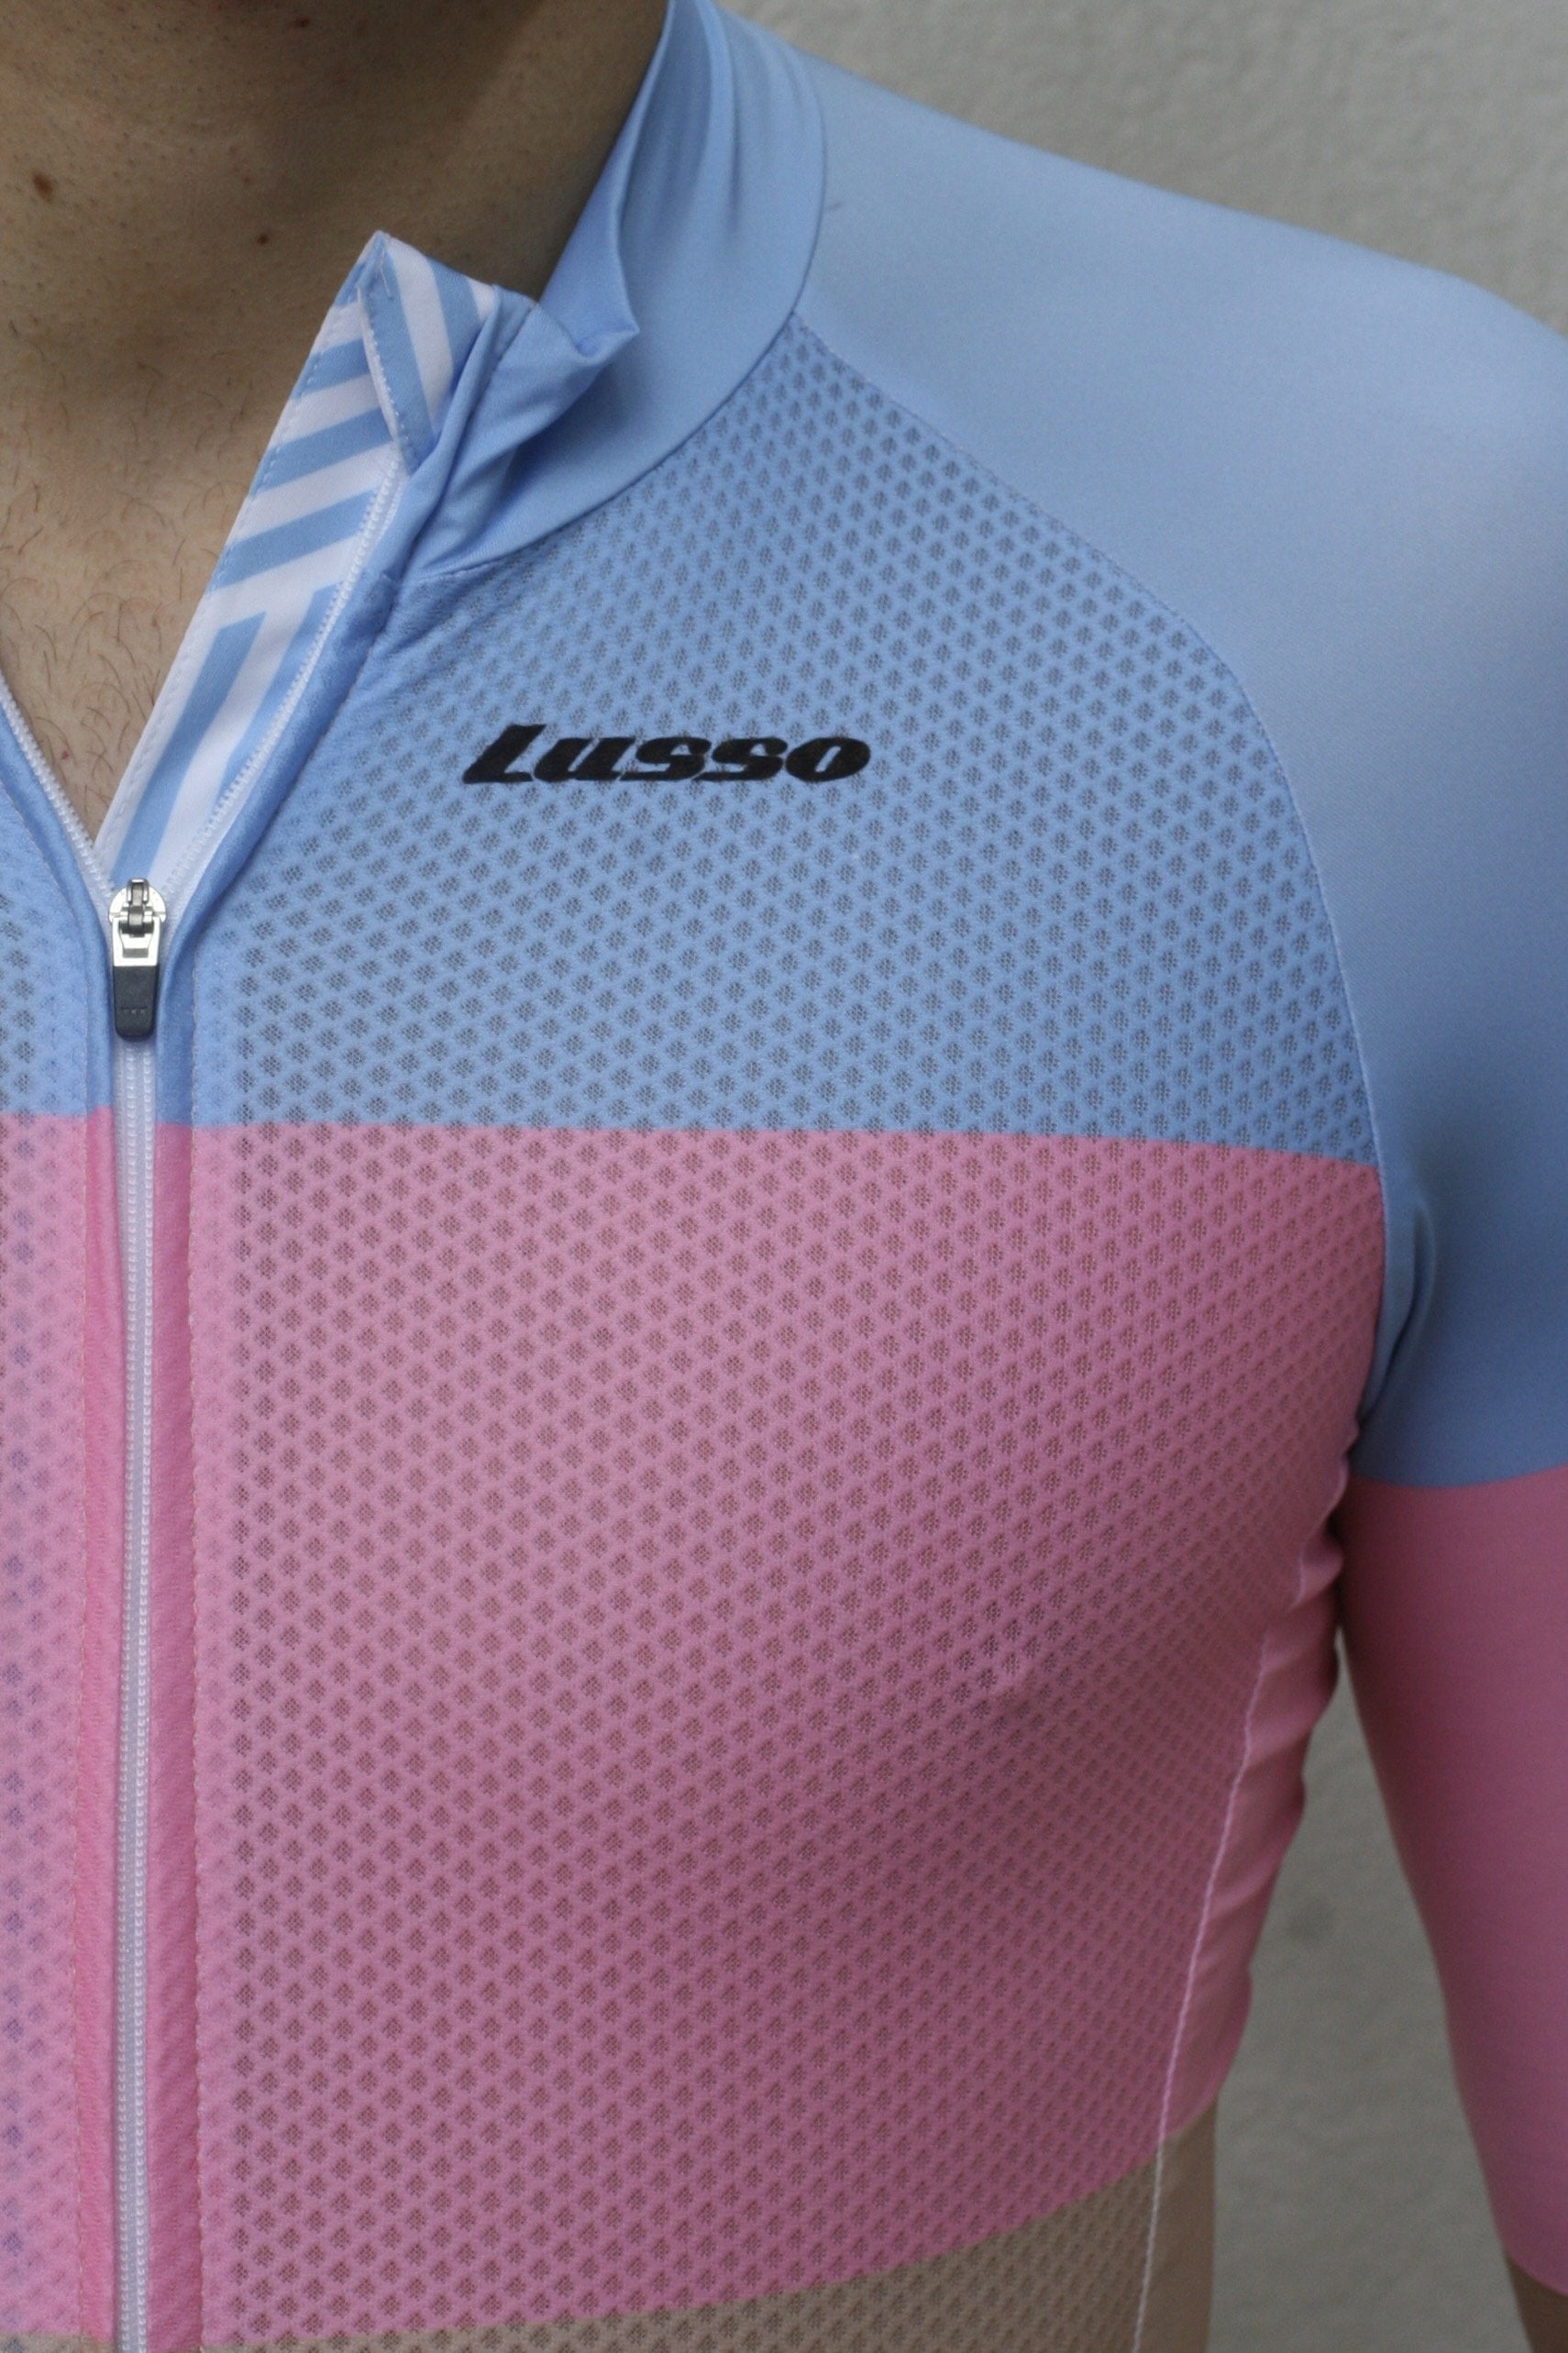 Dunsop Jersey - Lusso Cycle Wear